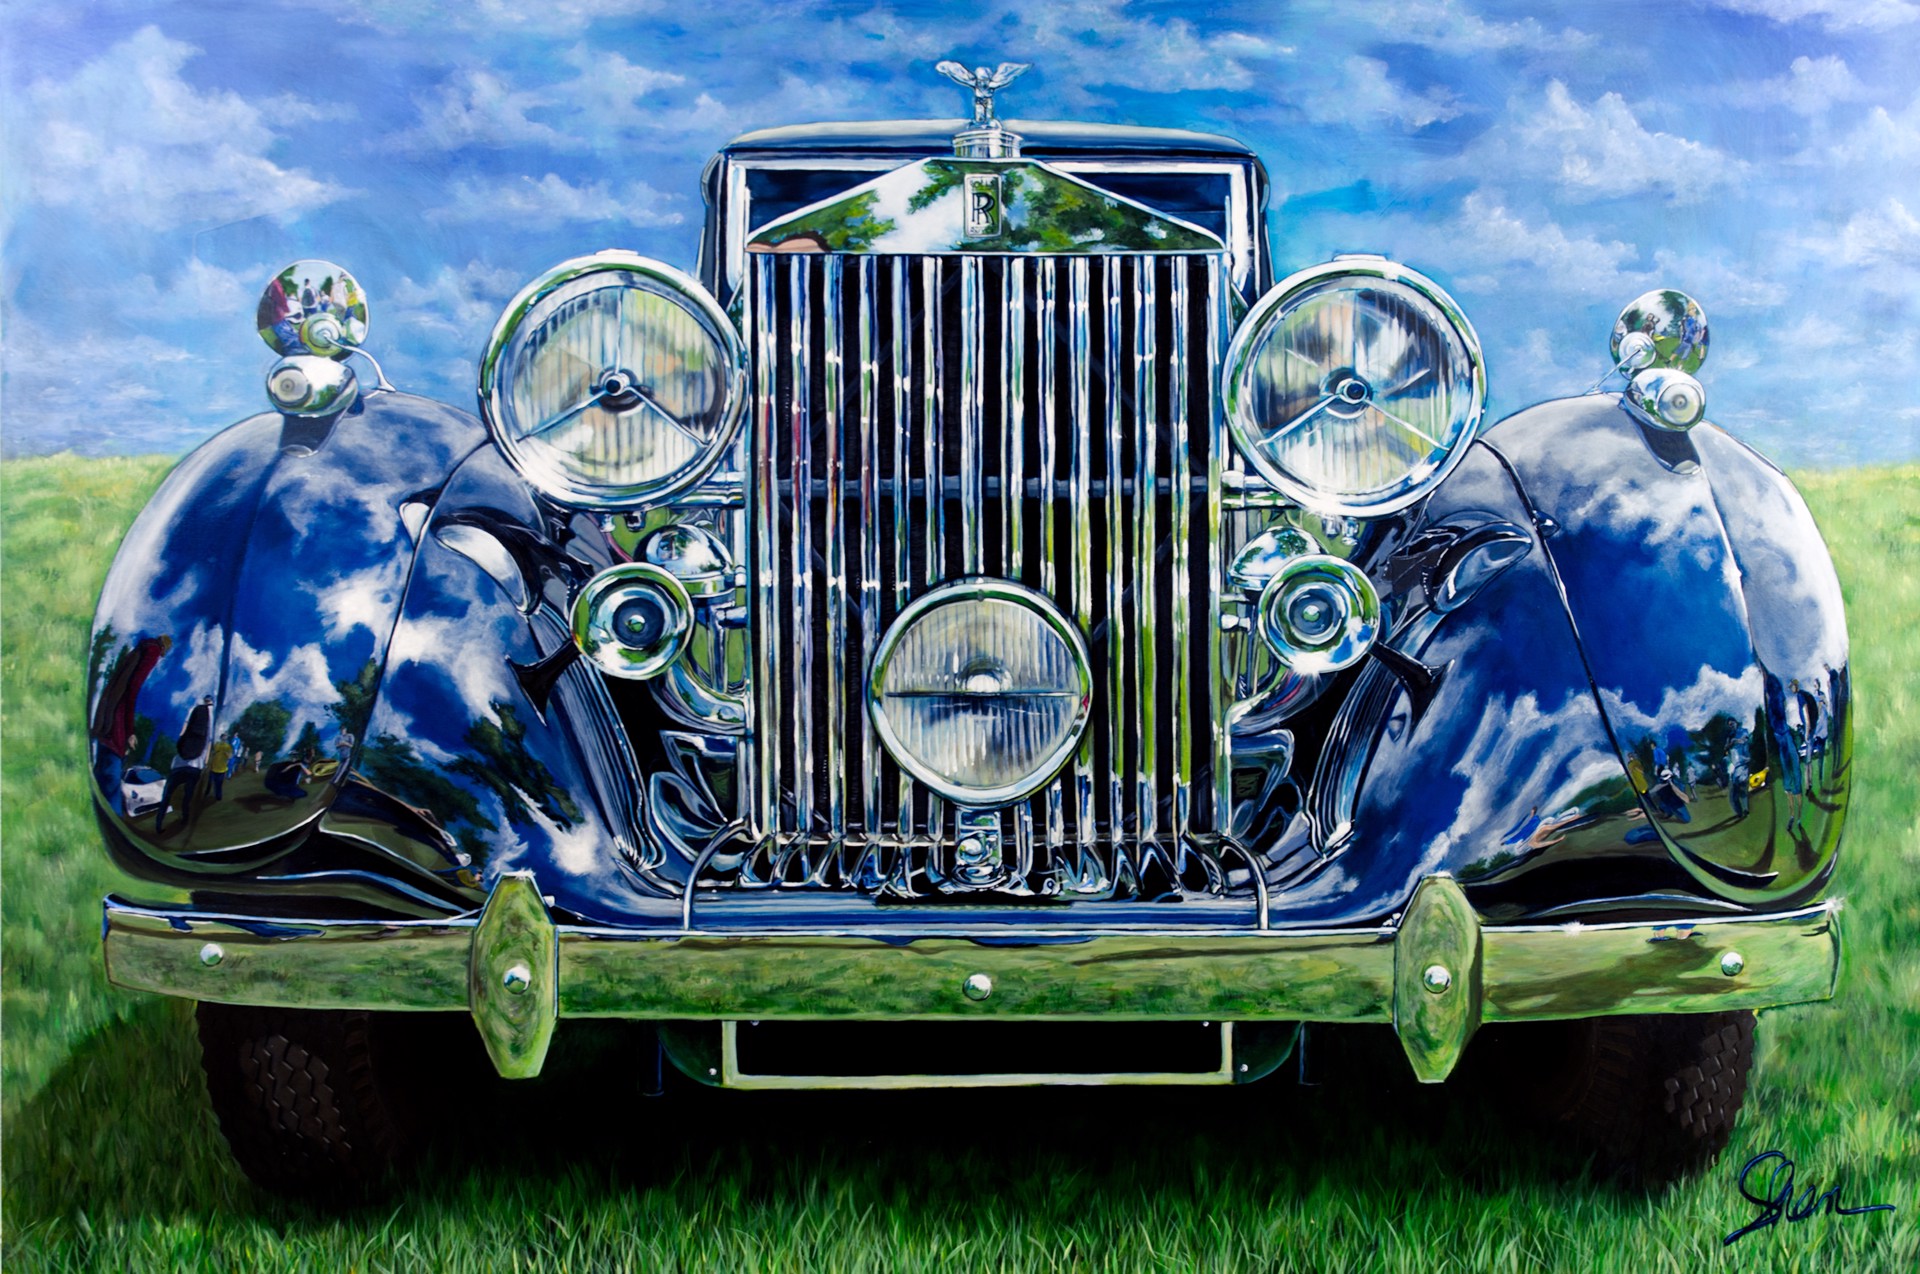 1937 Rolls Royce Phantom III Parkward Sedan cadeVille by Shan Fannin